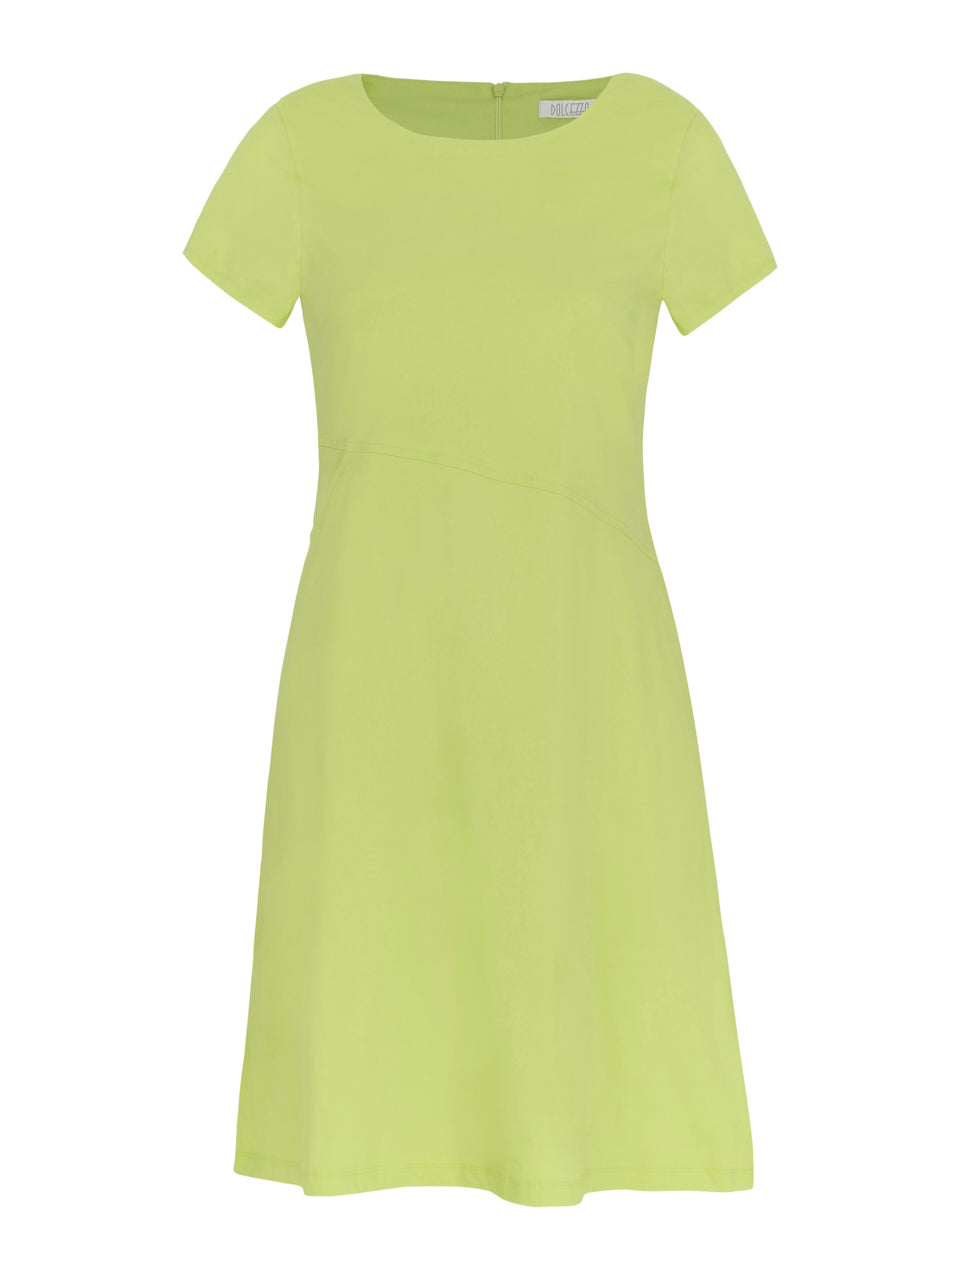 Dolcezza Short Sleeve Dress - Style 24221